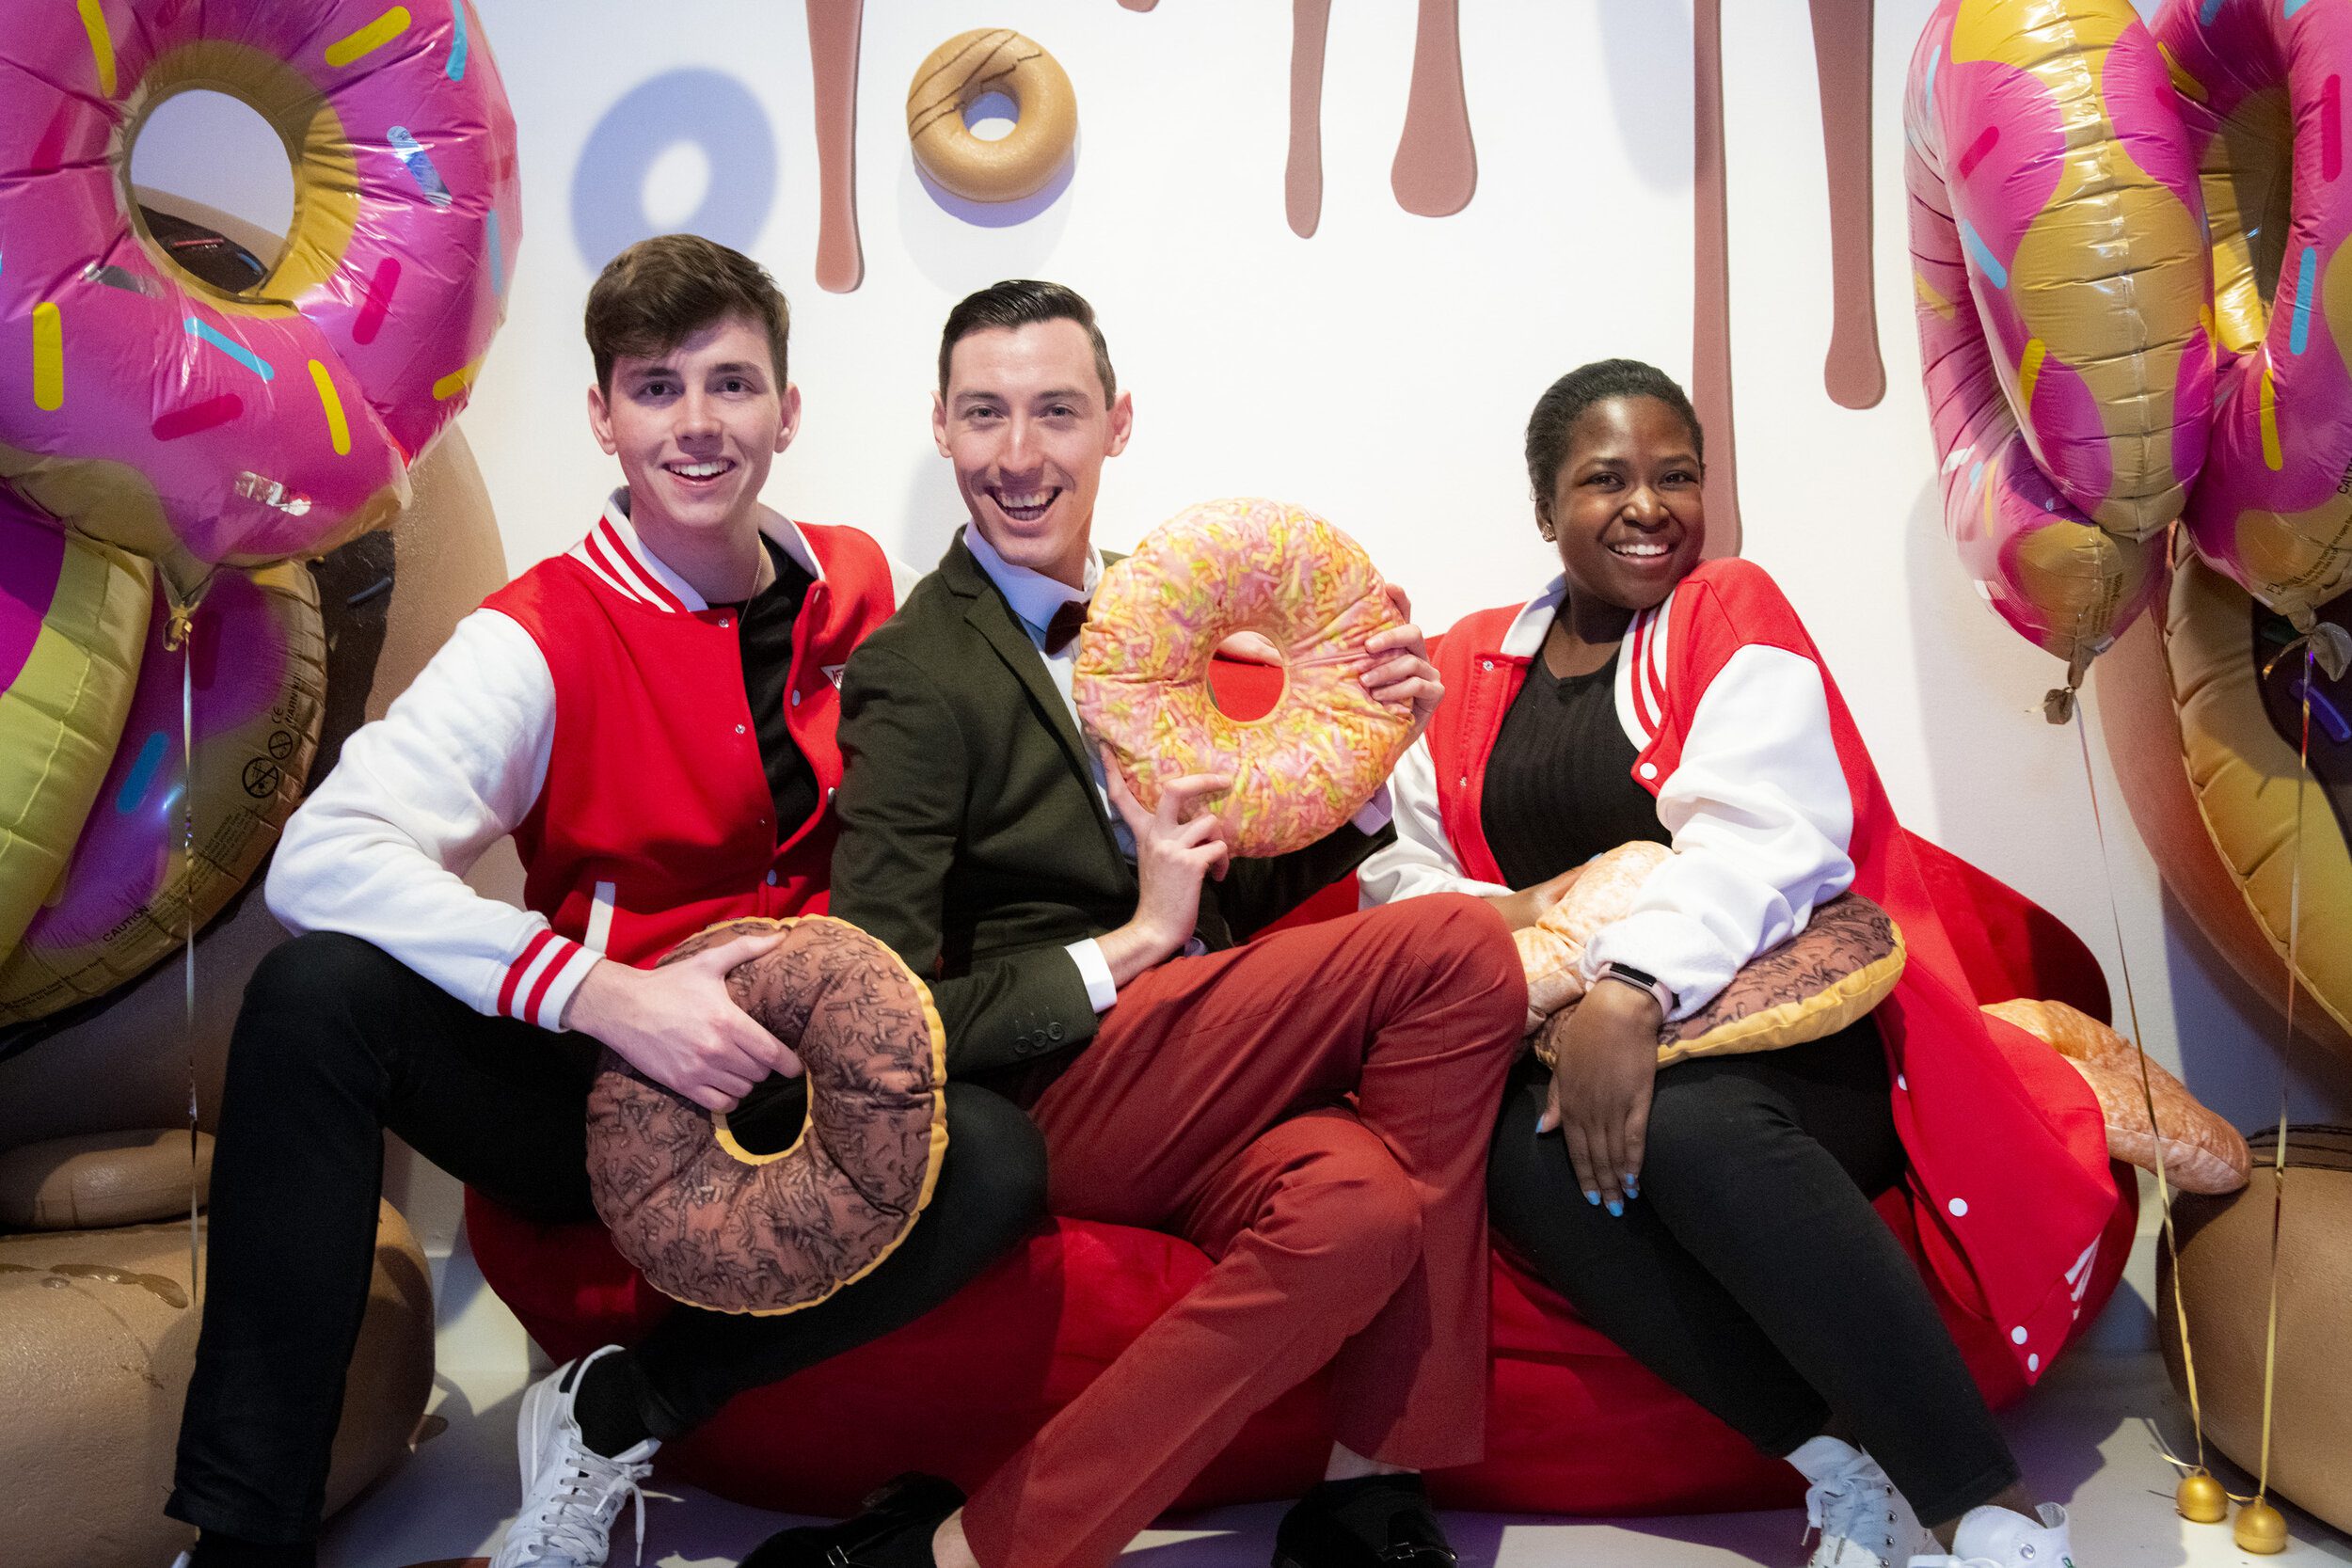 Hel's event staff with Krispy Kreme doughnut cushions